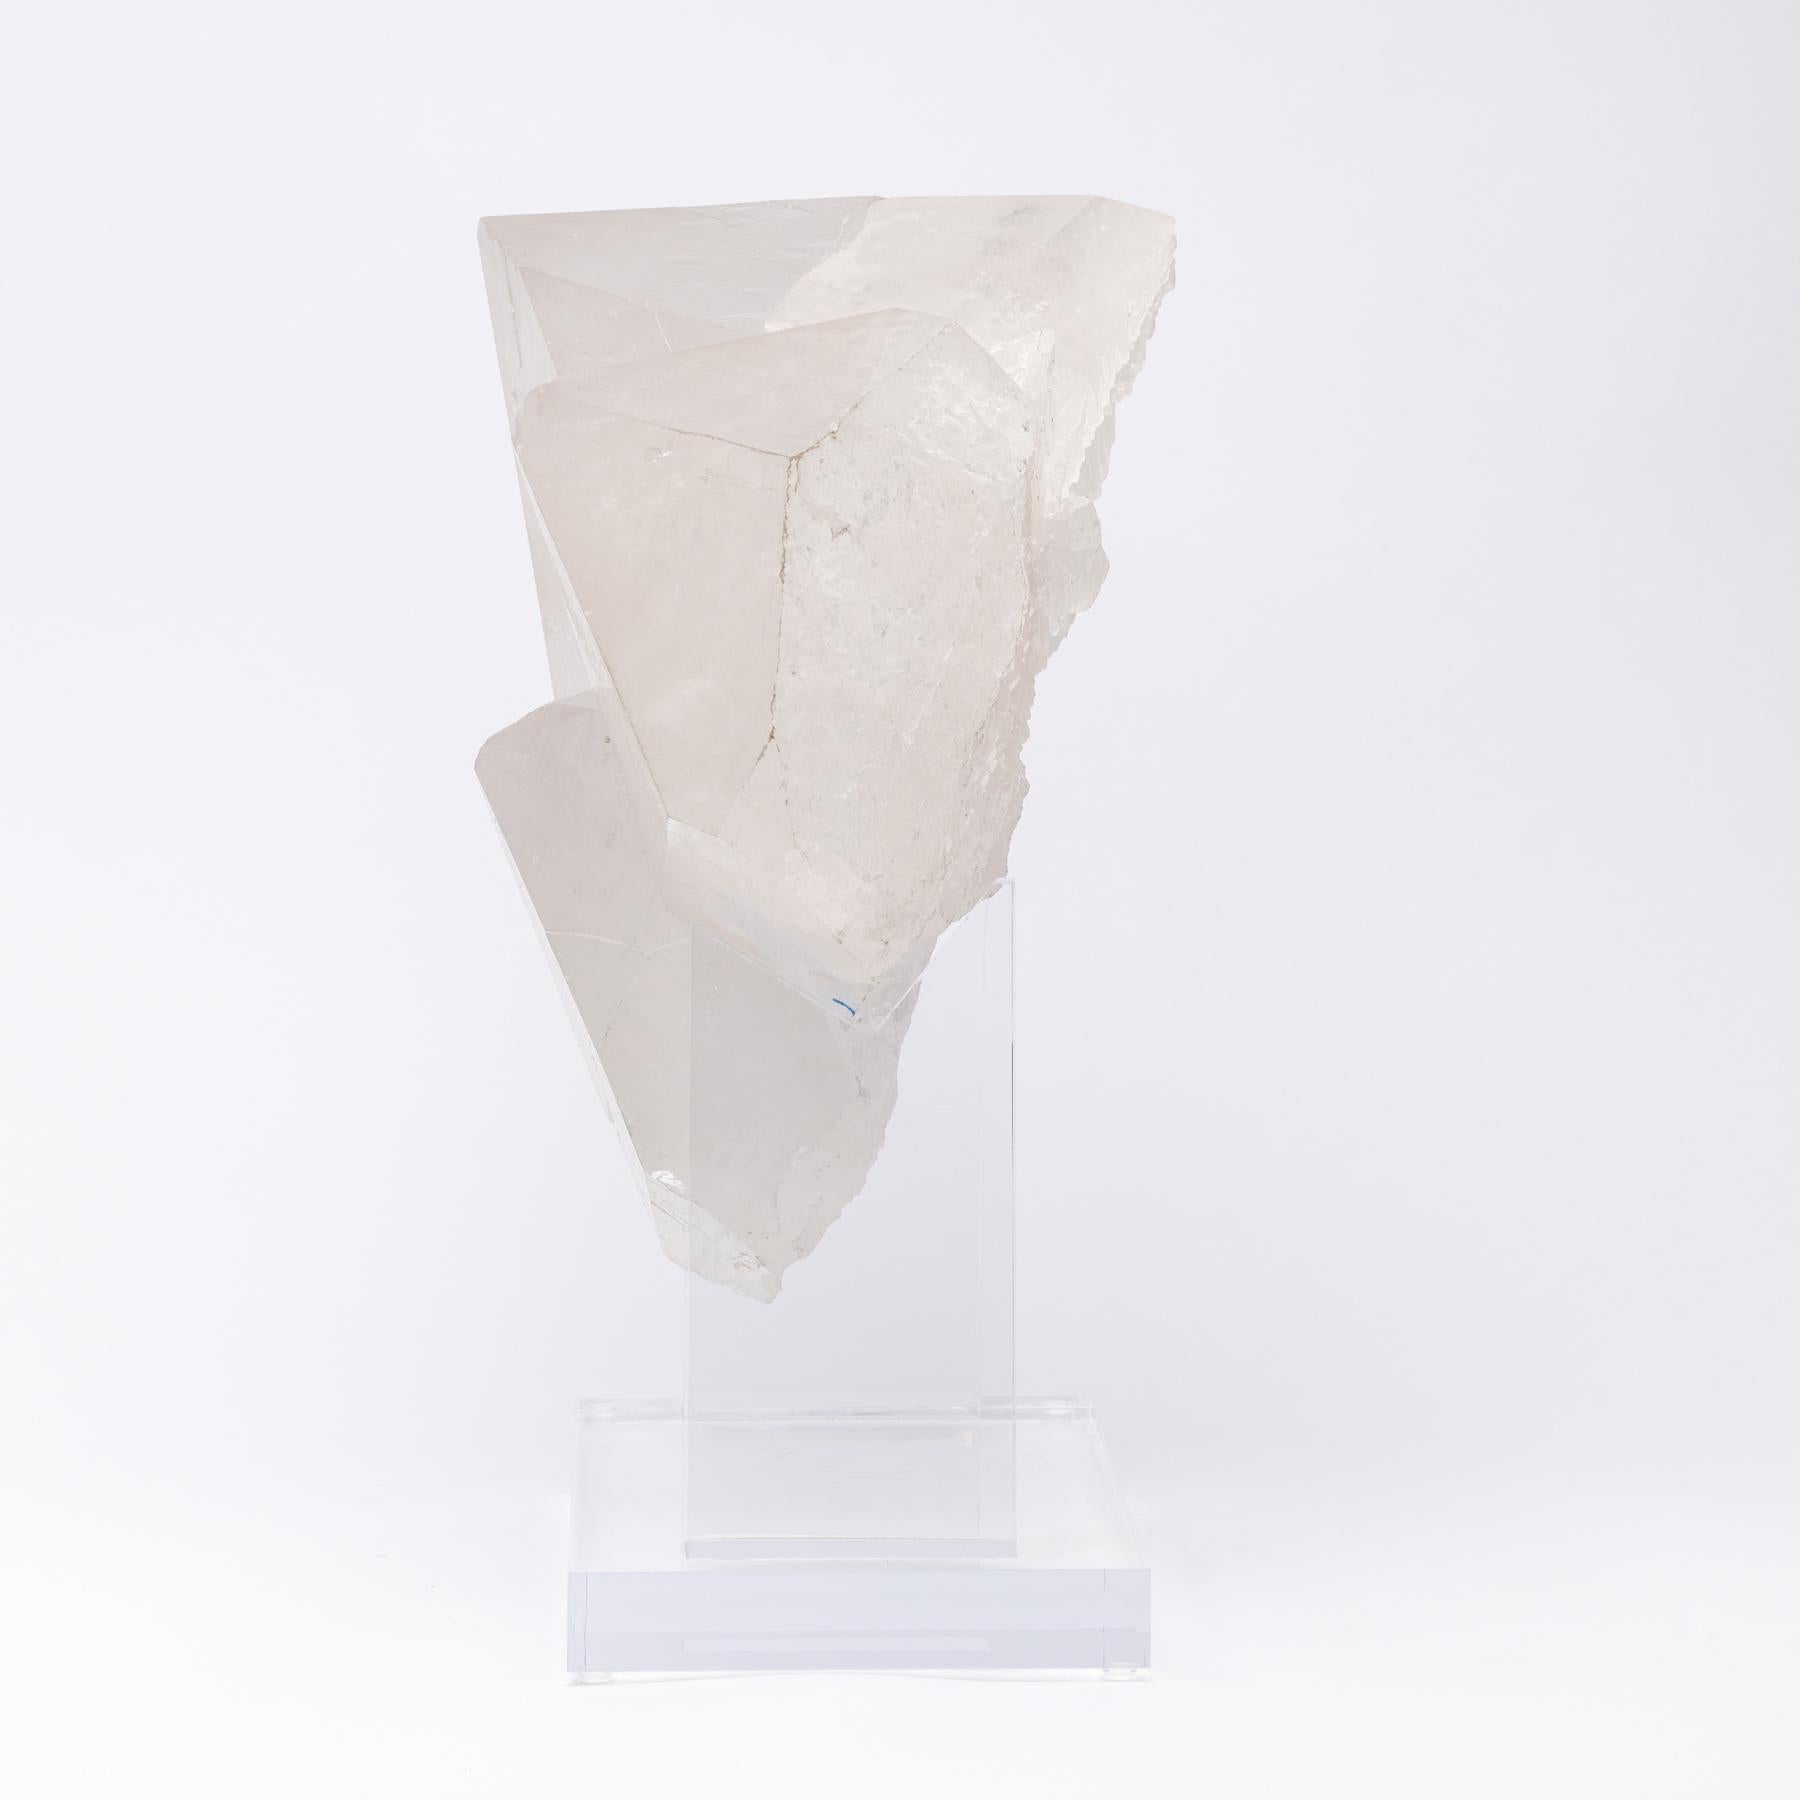 acrylic quartz